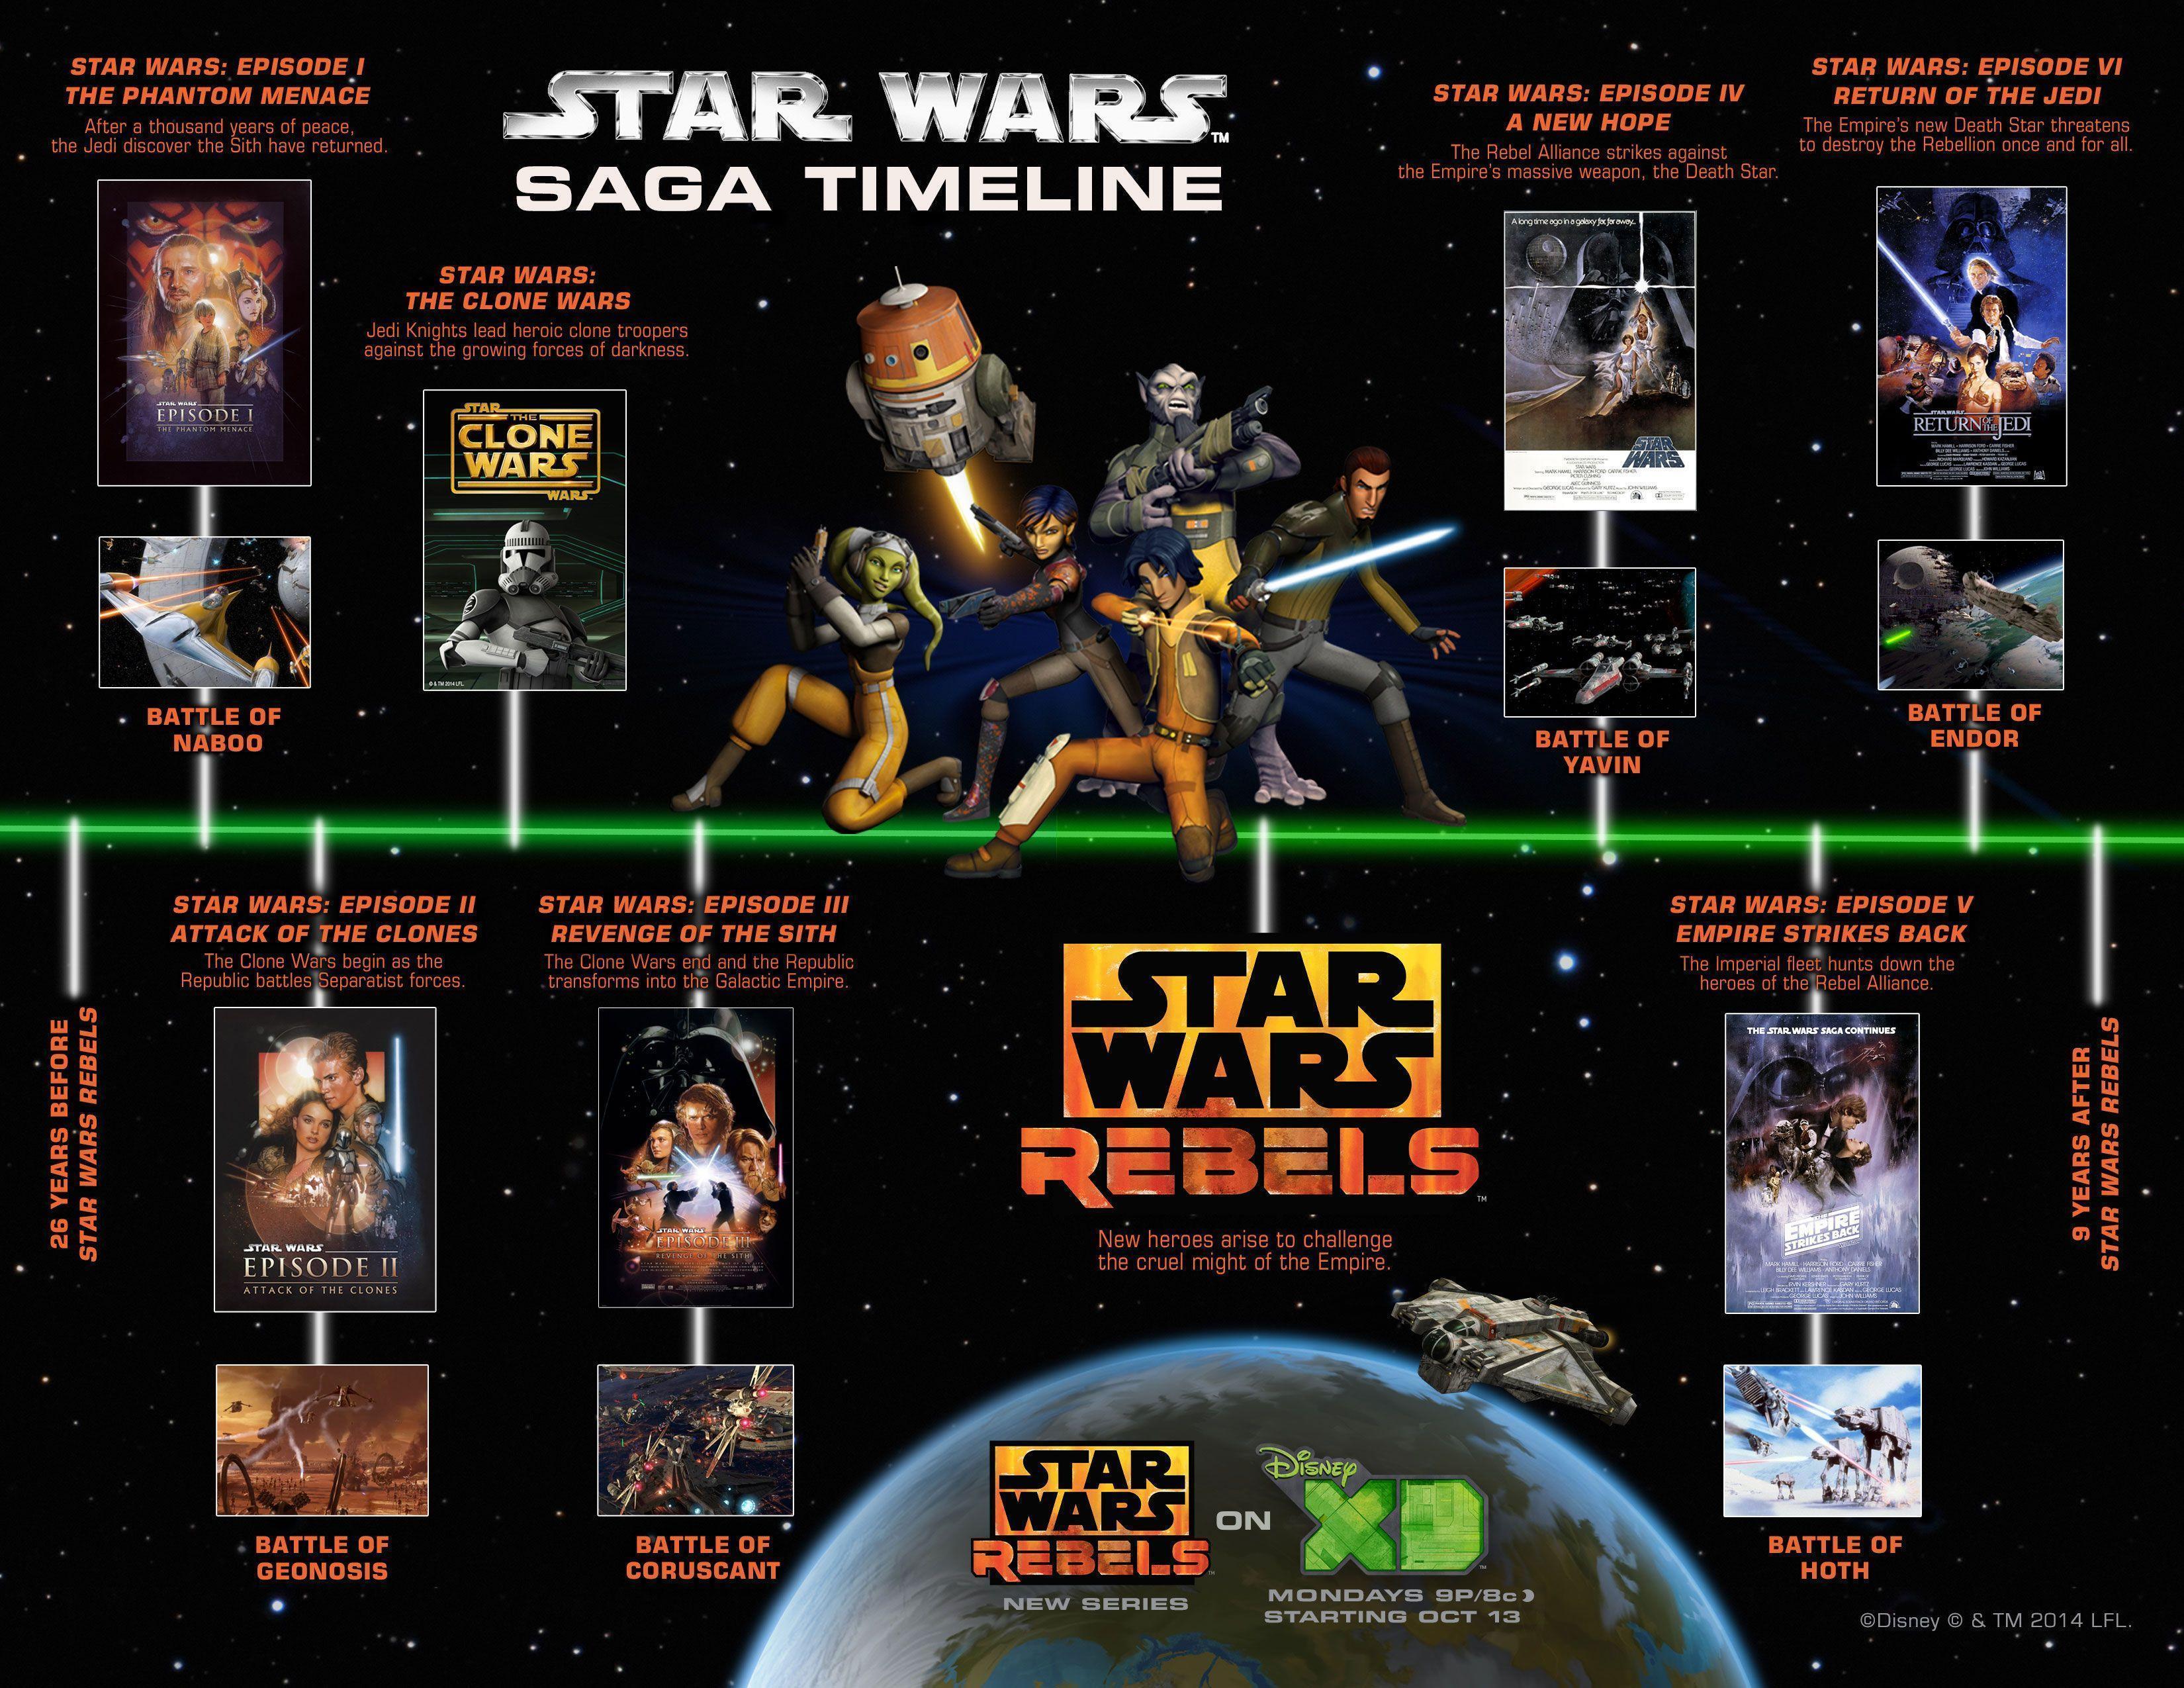 Star Wars Rebels Season 3 Image, Characters, Plot Details